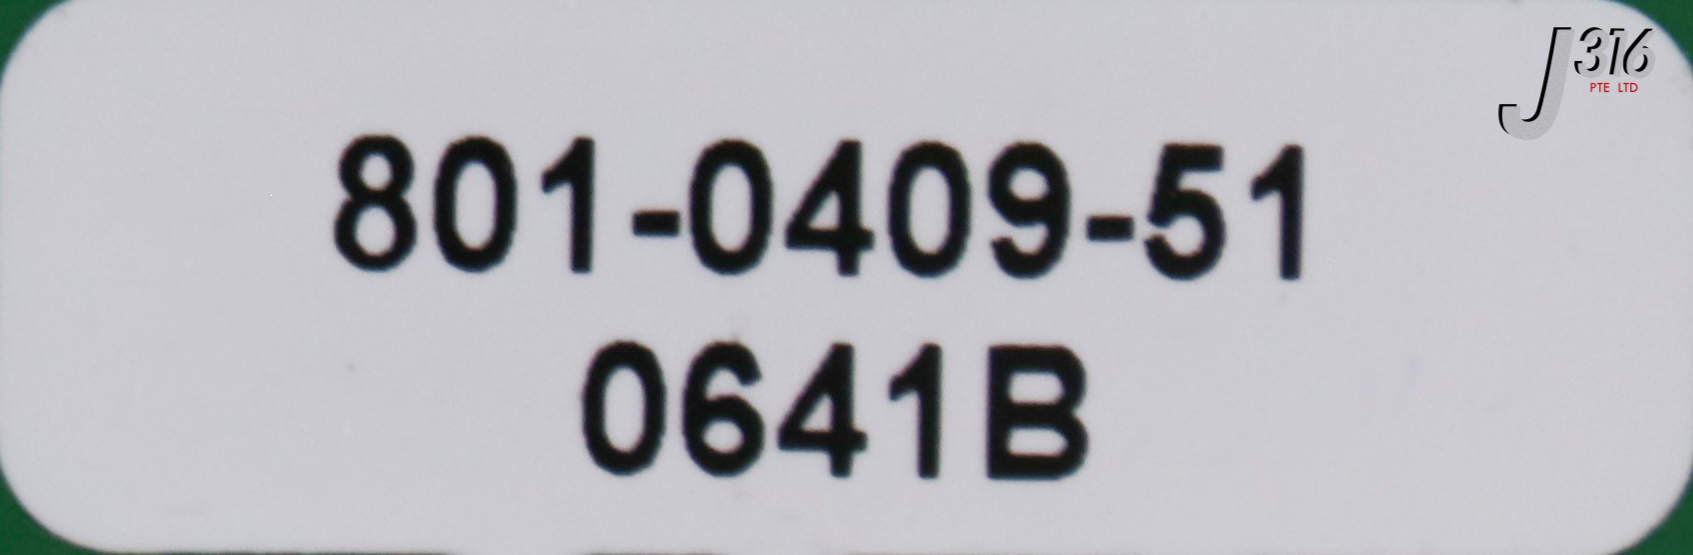 20546 ECHELON PCB, NETWORK ADAPTER W/ 50020R-10, 375-0167-51… – J316Gallery